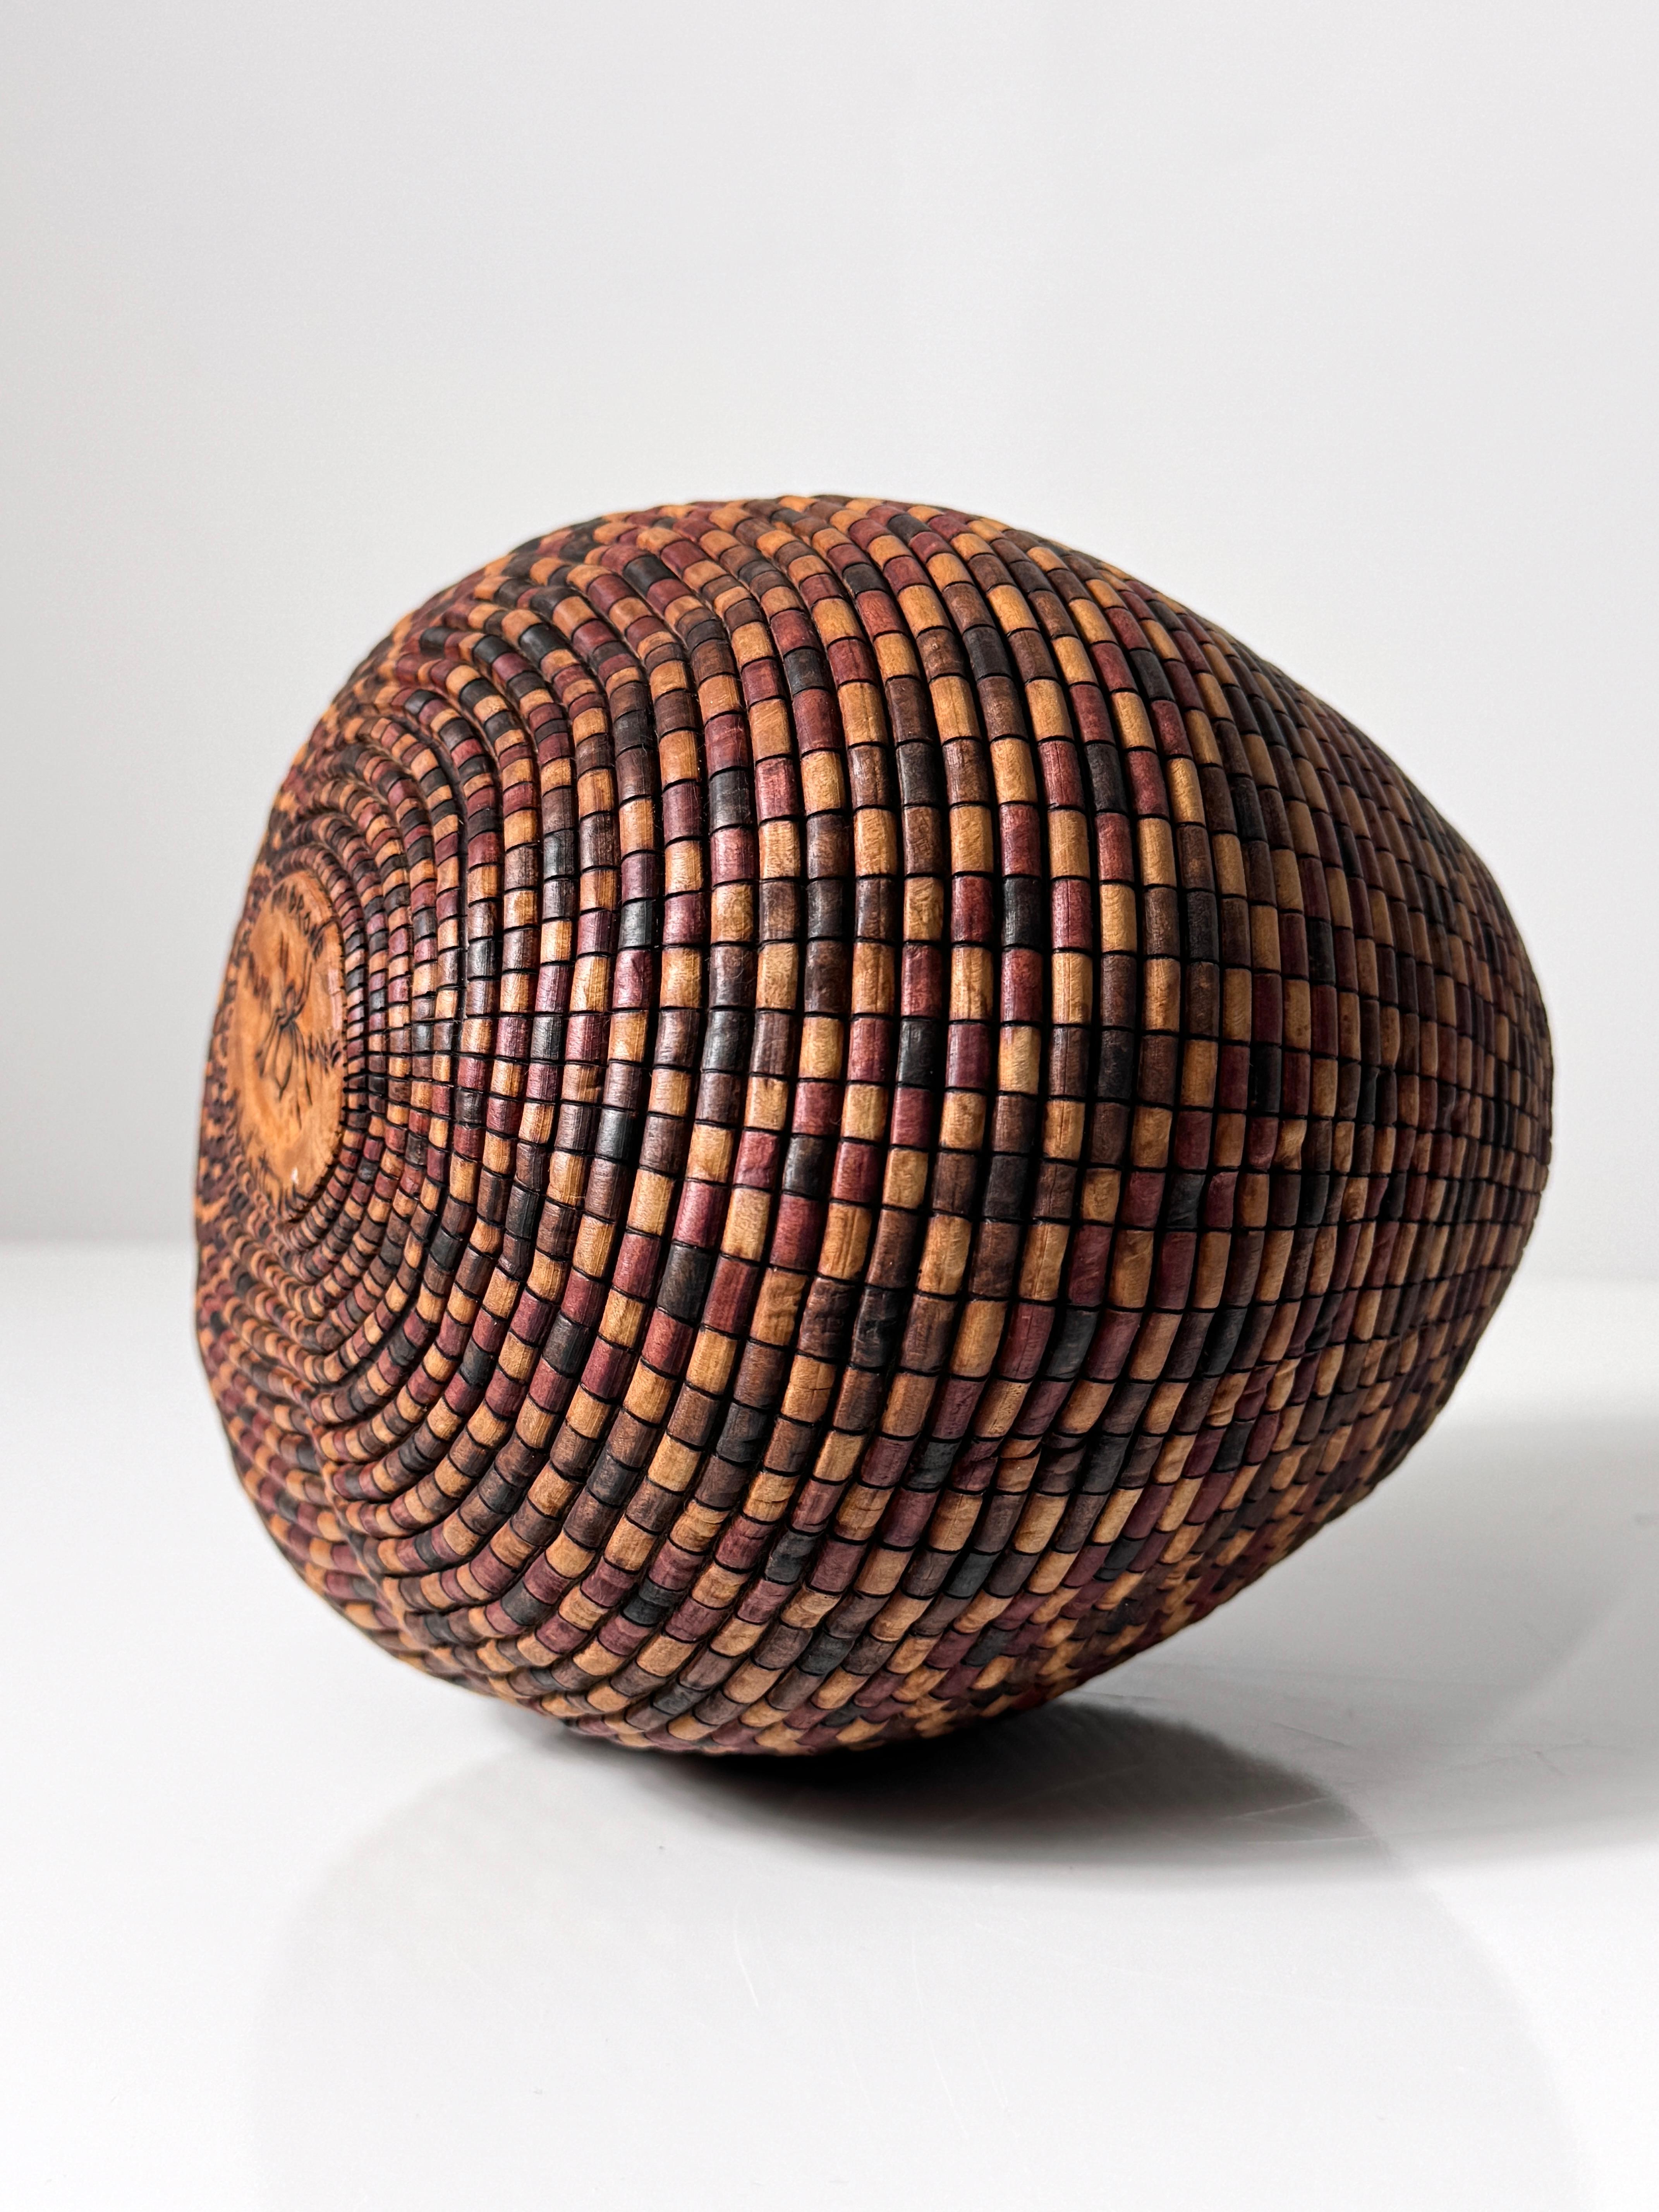 American Studio Turned Wood Basket Illusion Vessel Bowl by David Nittmann 1990s 3